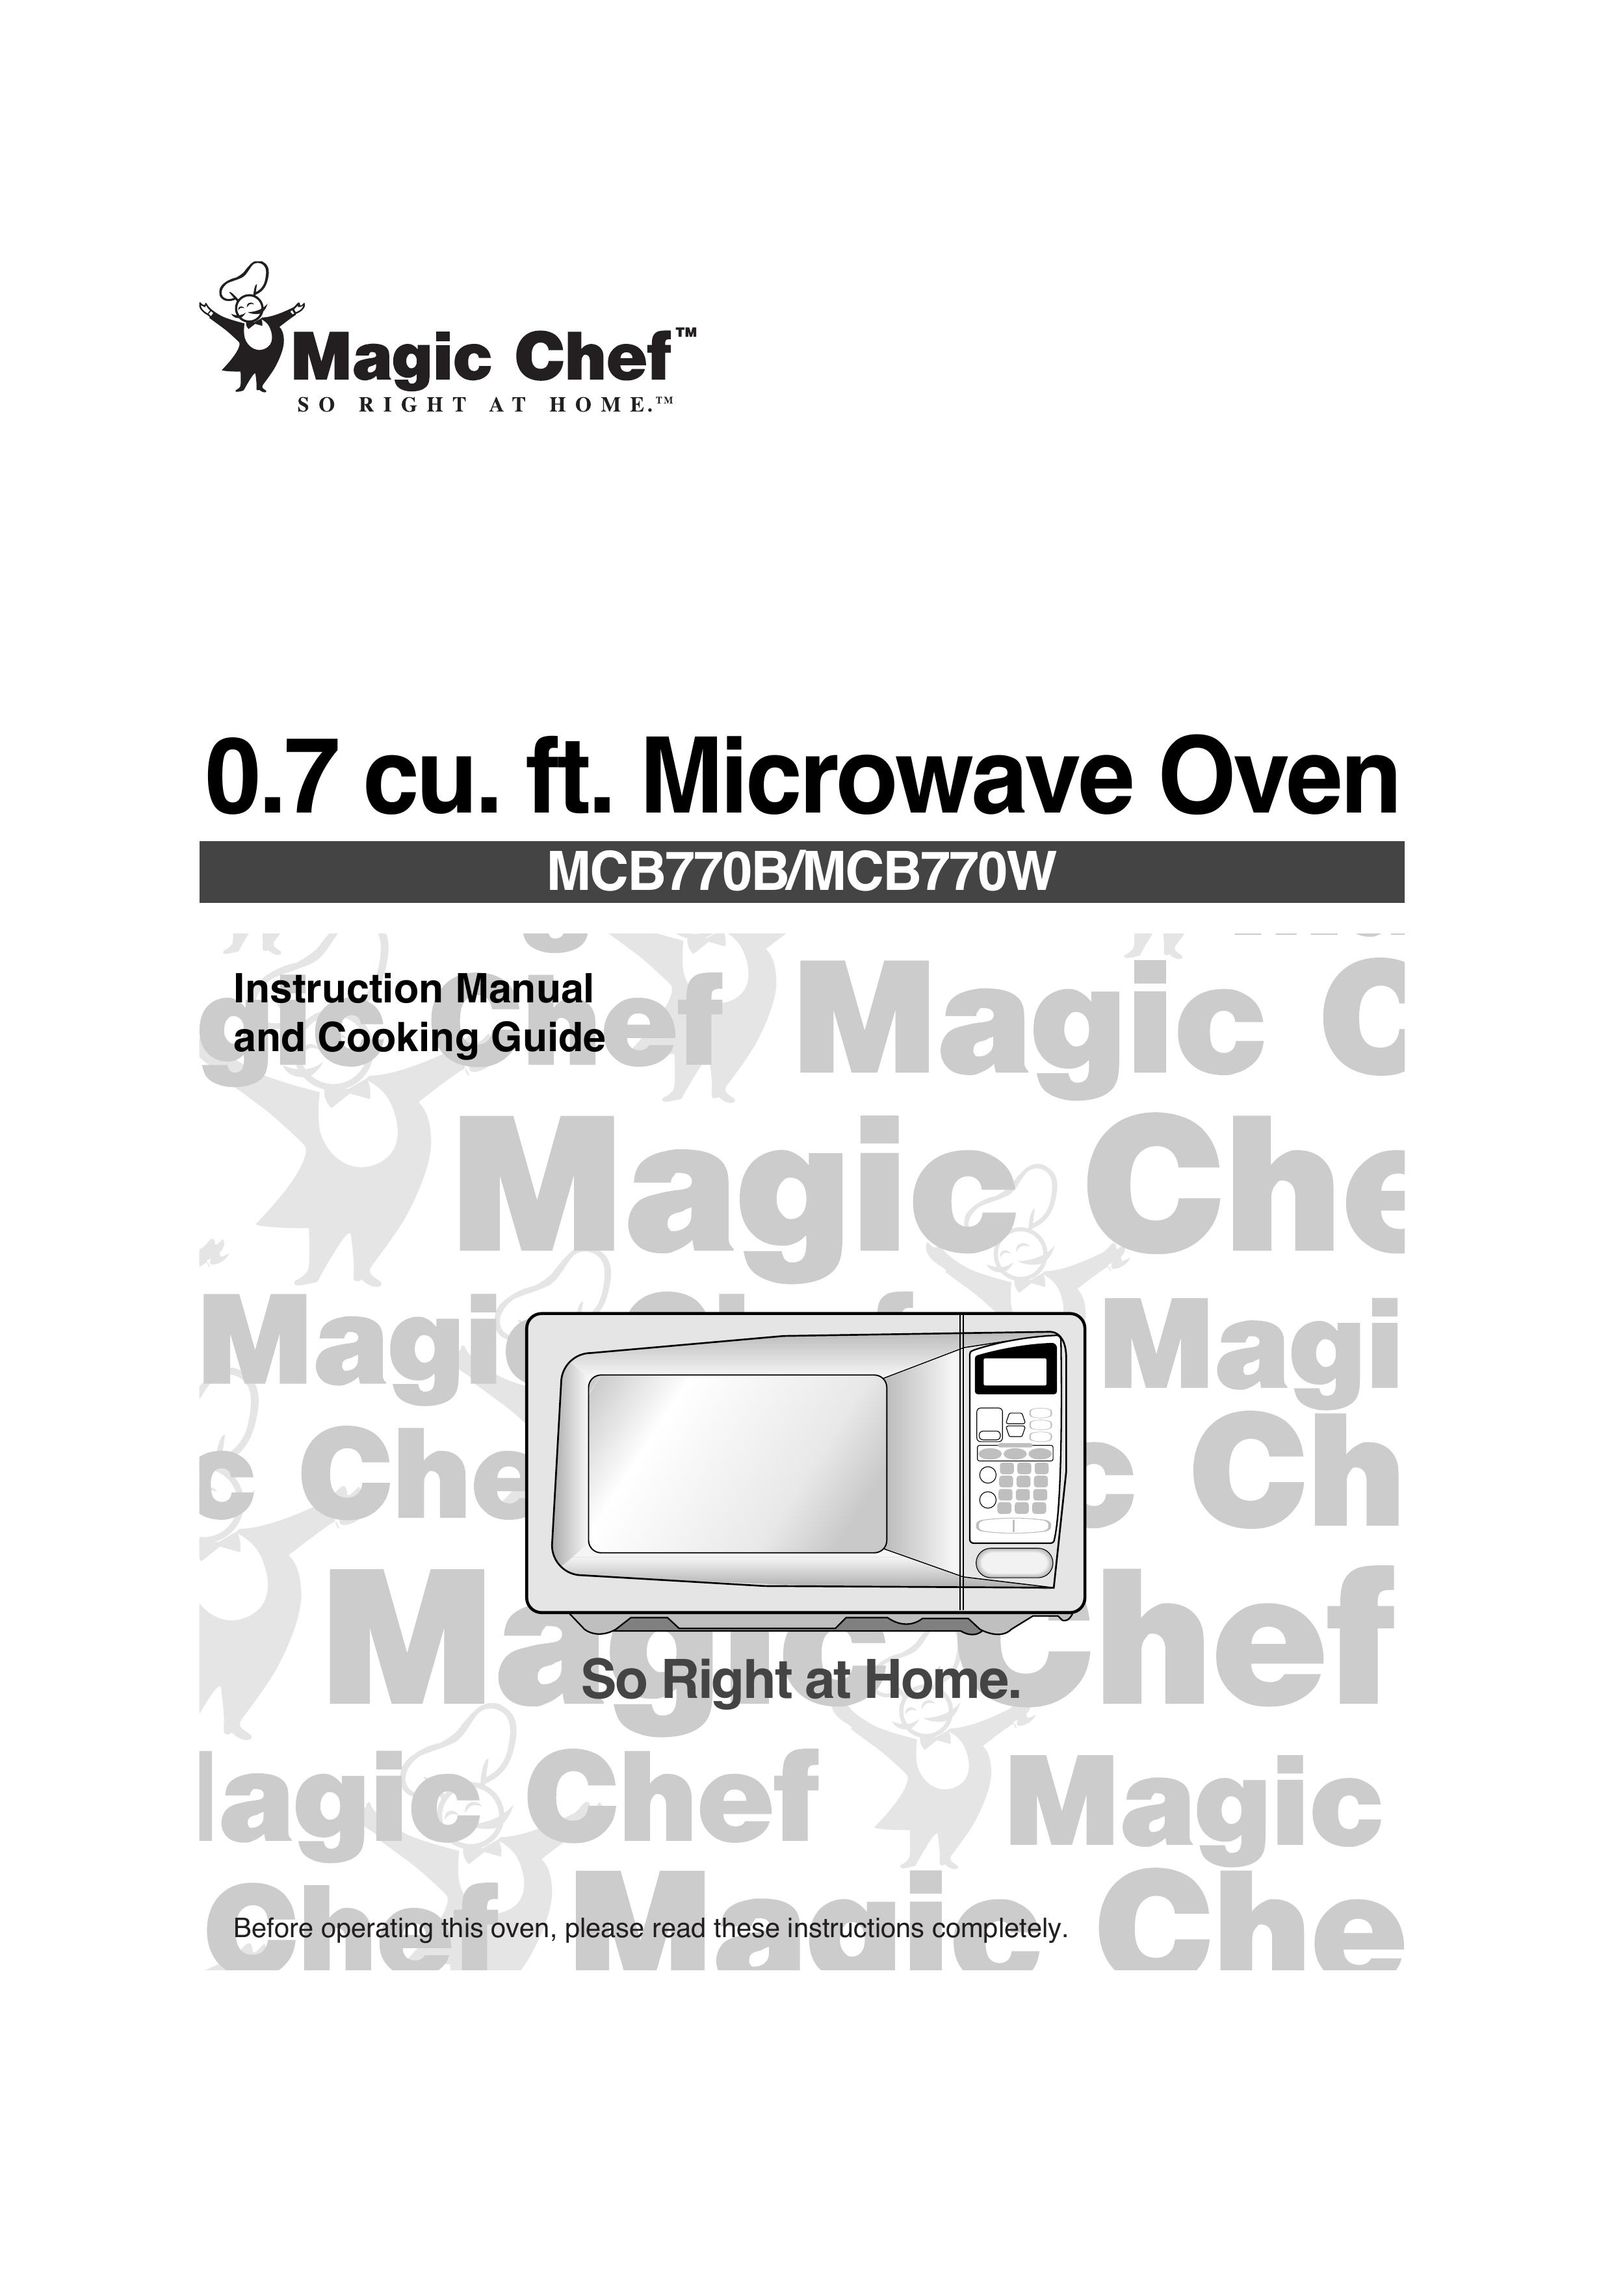 Magic Chef MCB770B Microwave Oven User Manual